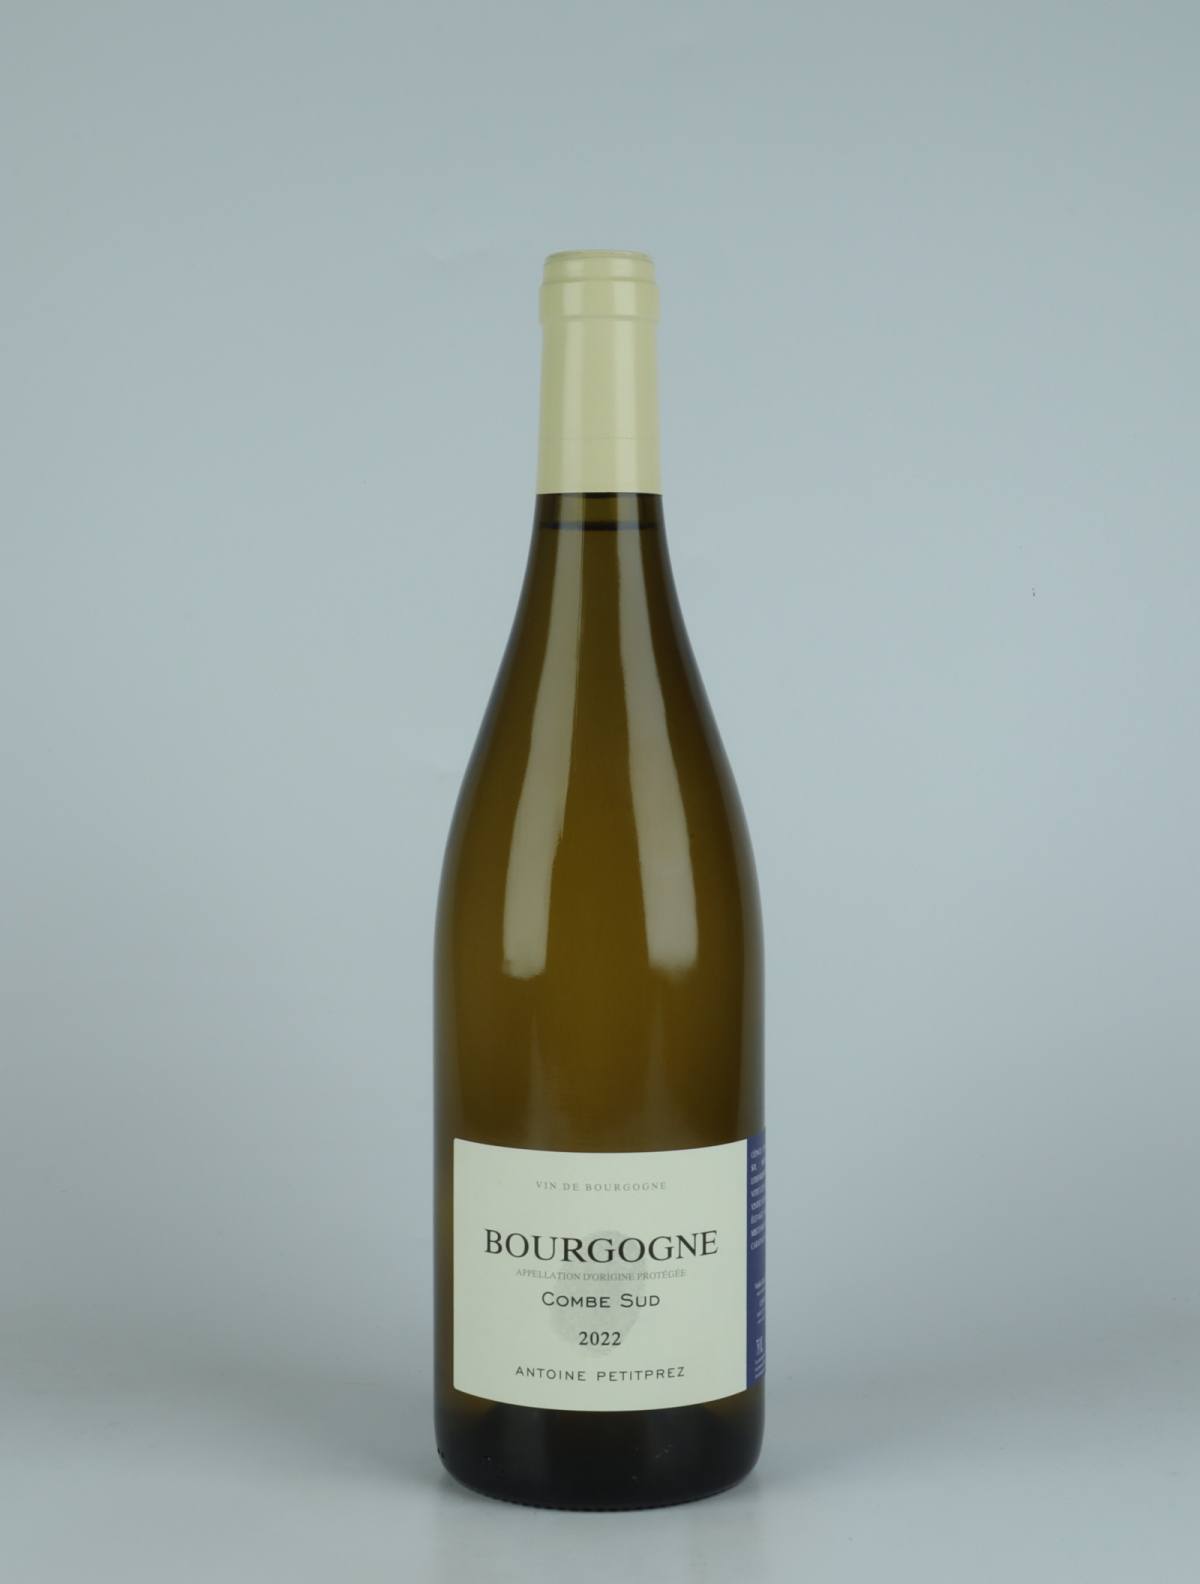 En flaske 2022 Bourgogne Blanc - Combe Sud Hvidvin fra Antoine Petitprez, Bourgogne i Frankrig